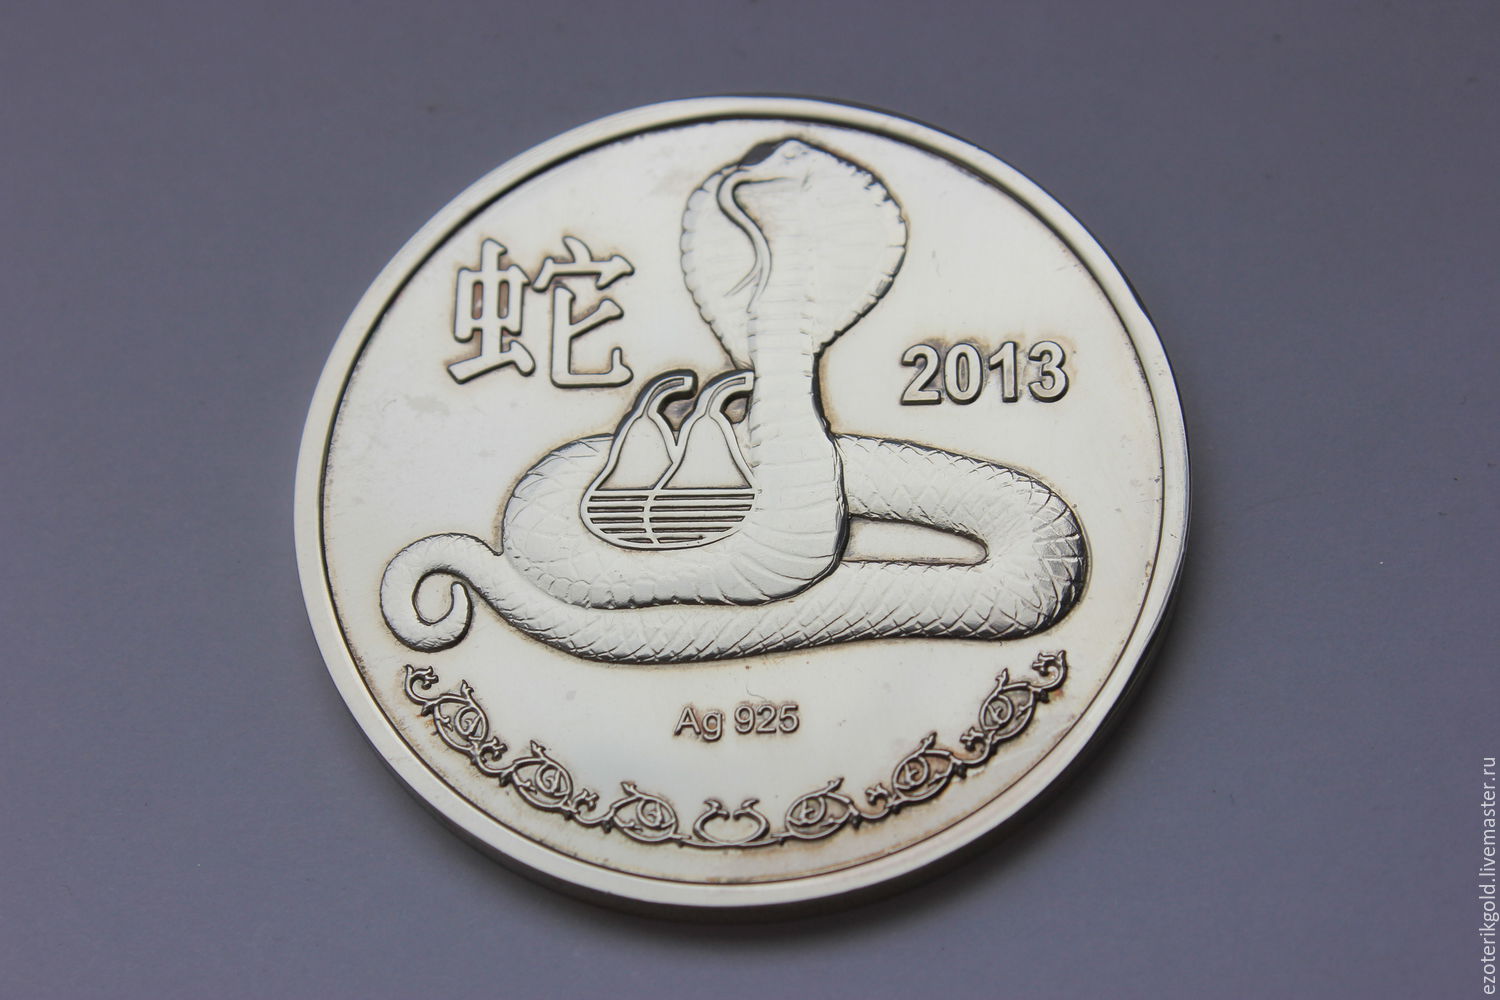 Медаль для банка БРТ "Змея"